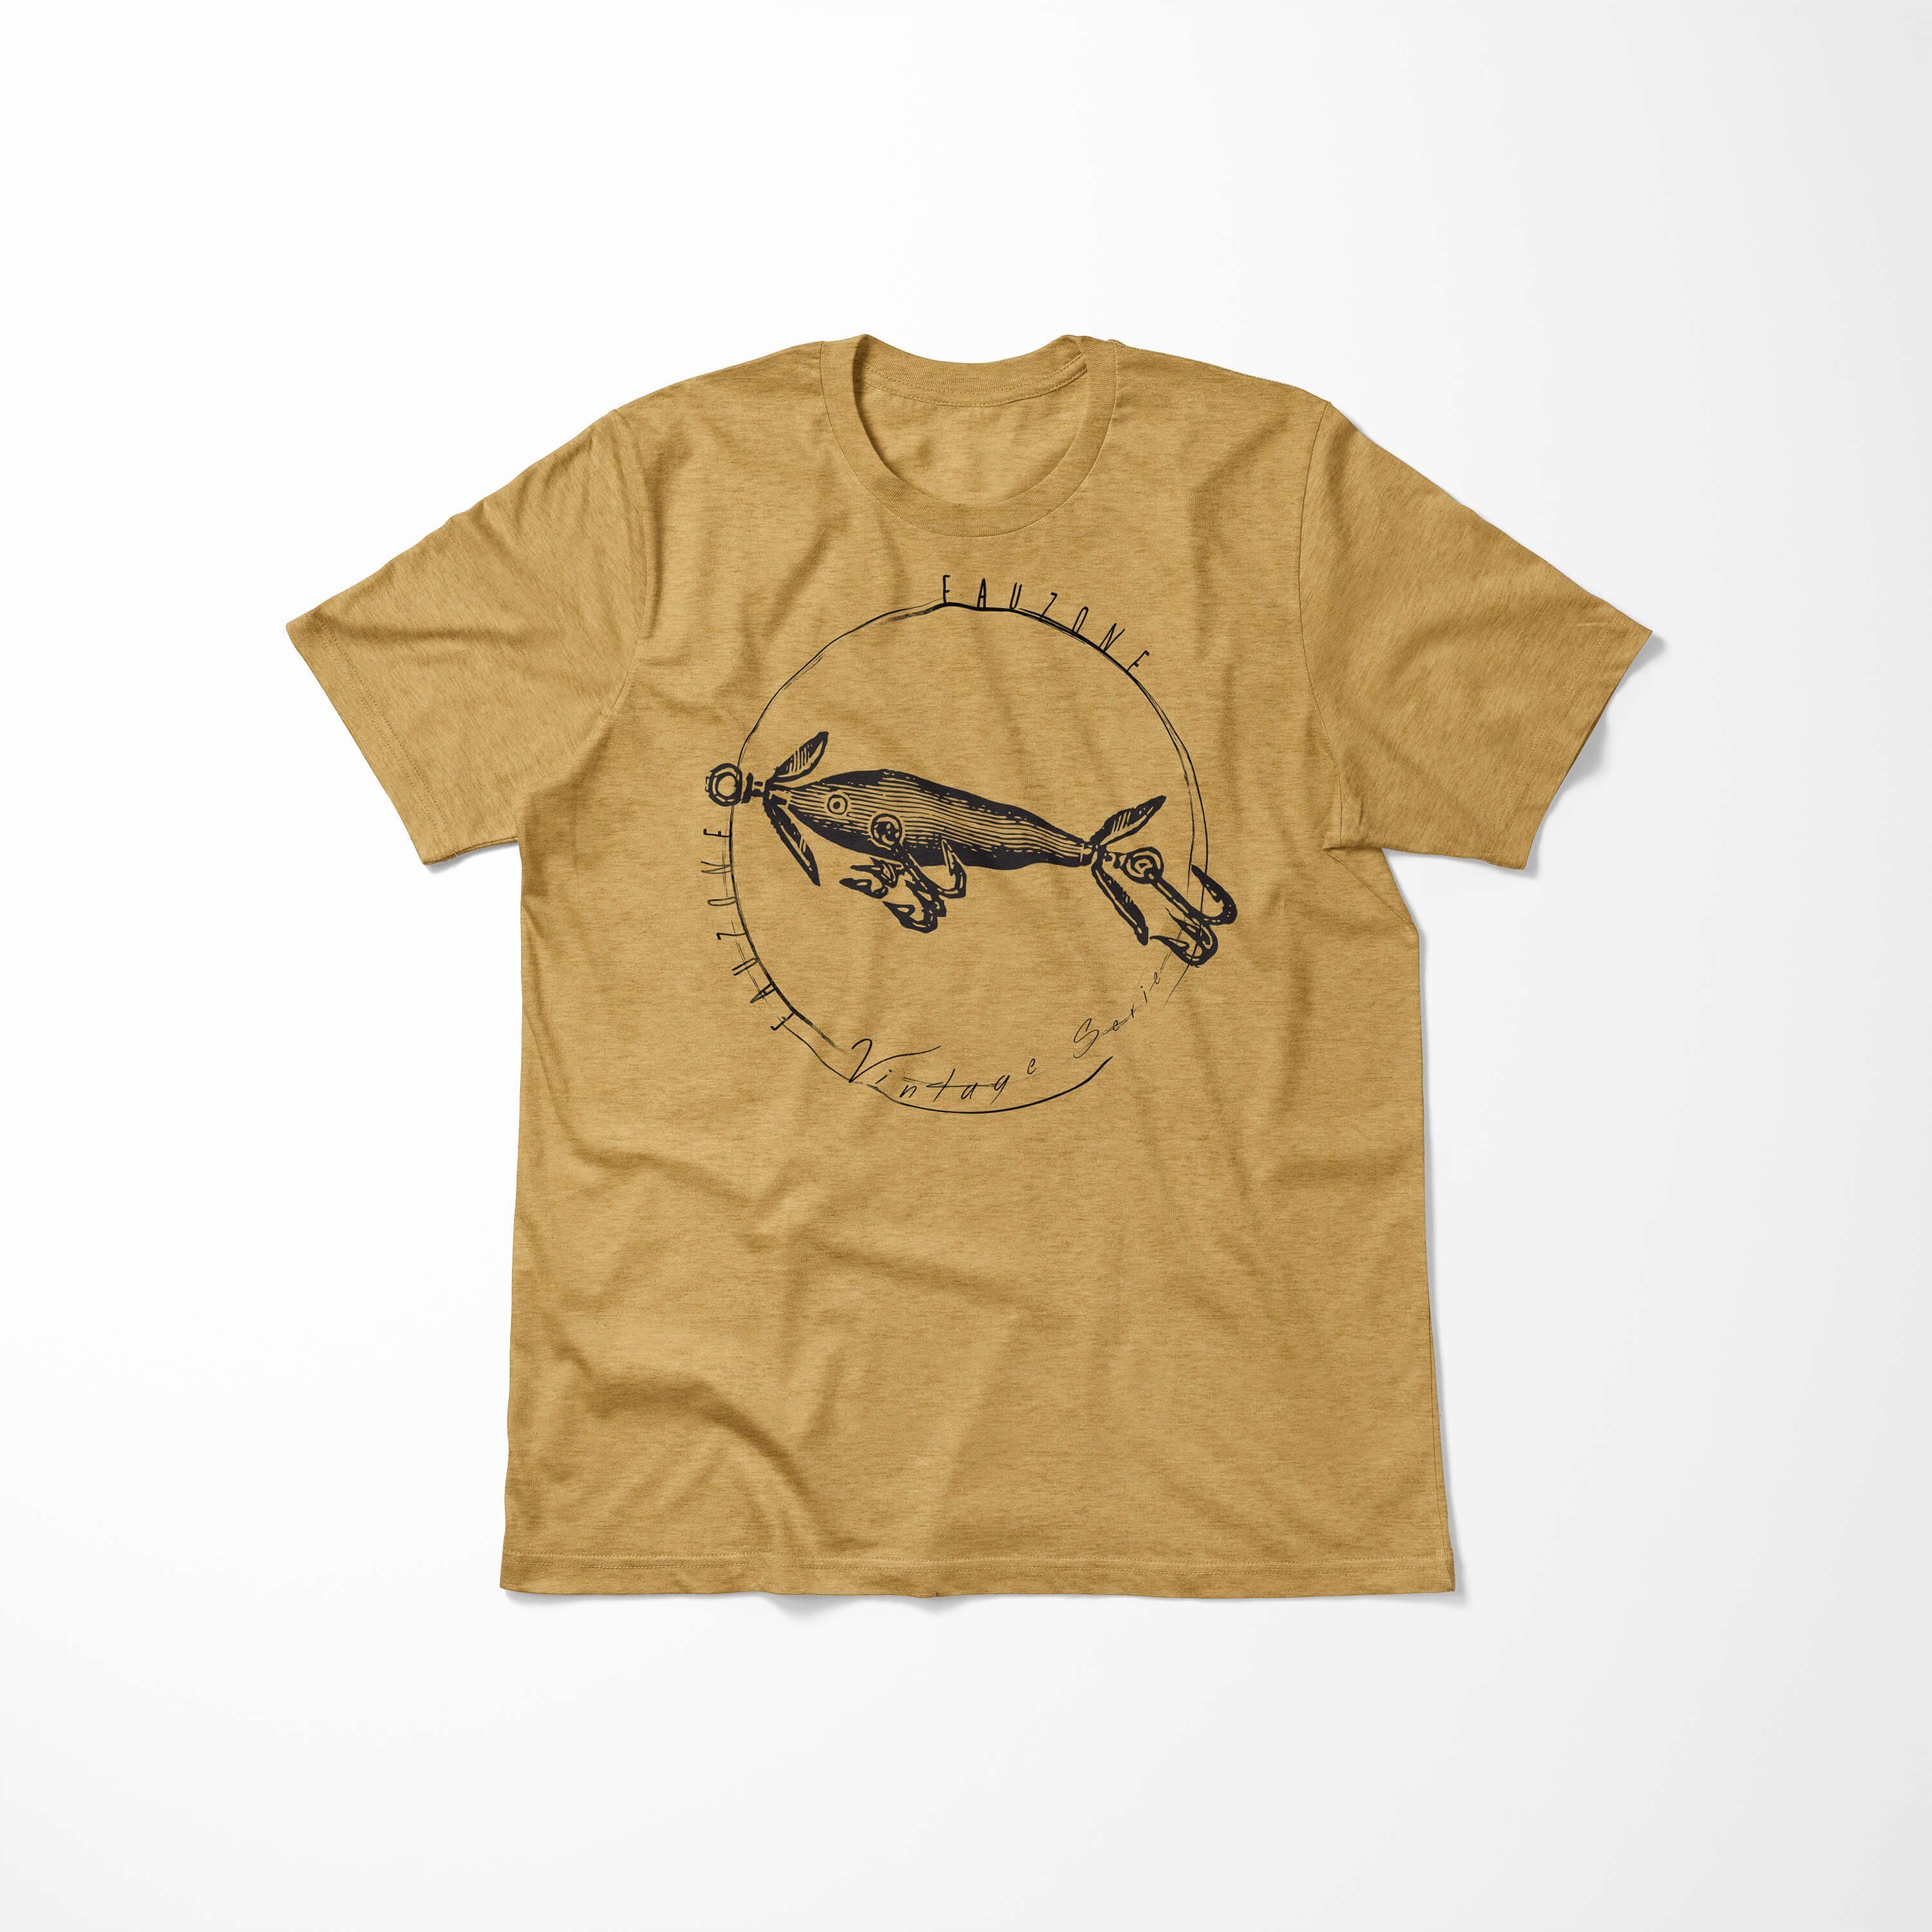 Art Herren Antique T-Shirt Gold Sinus Vintage T-Shirt Fischhaken